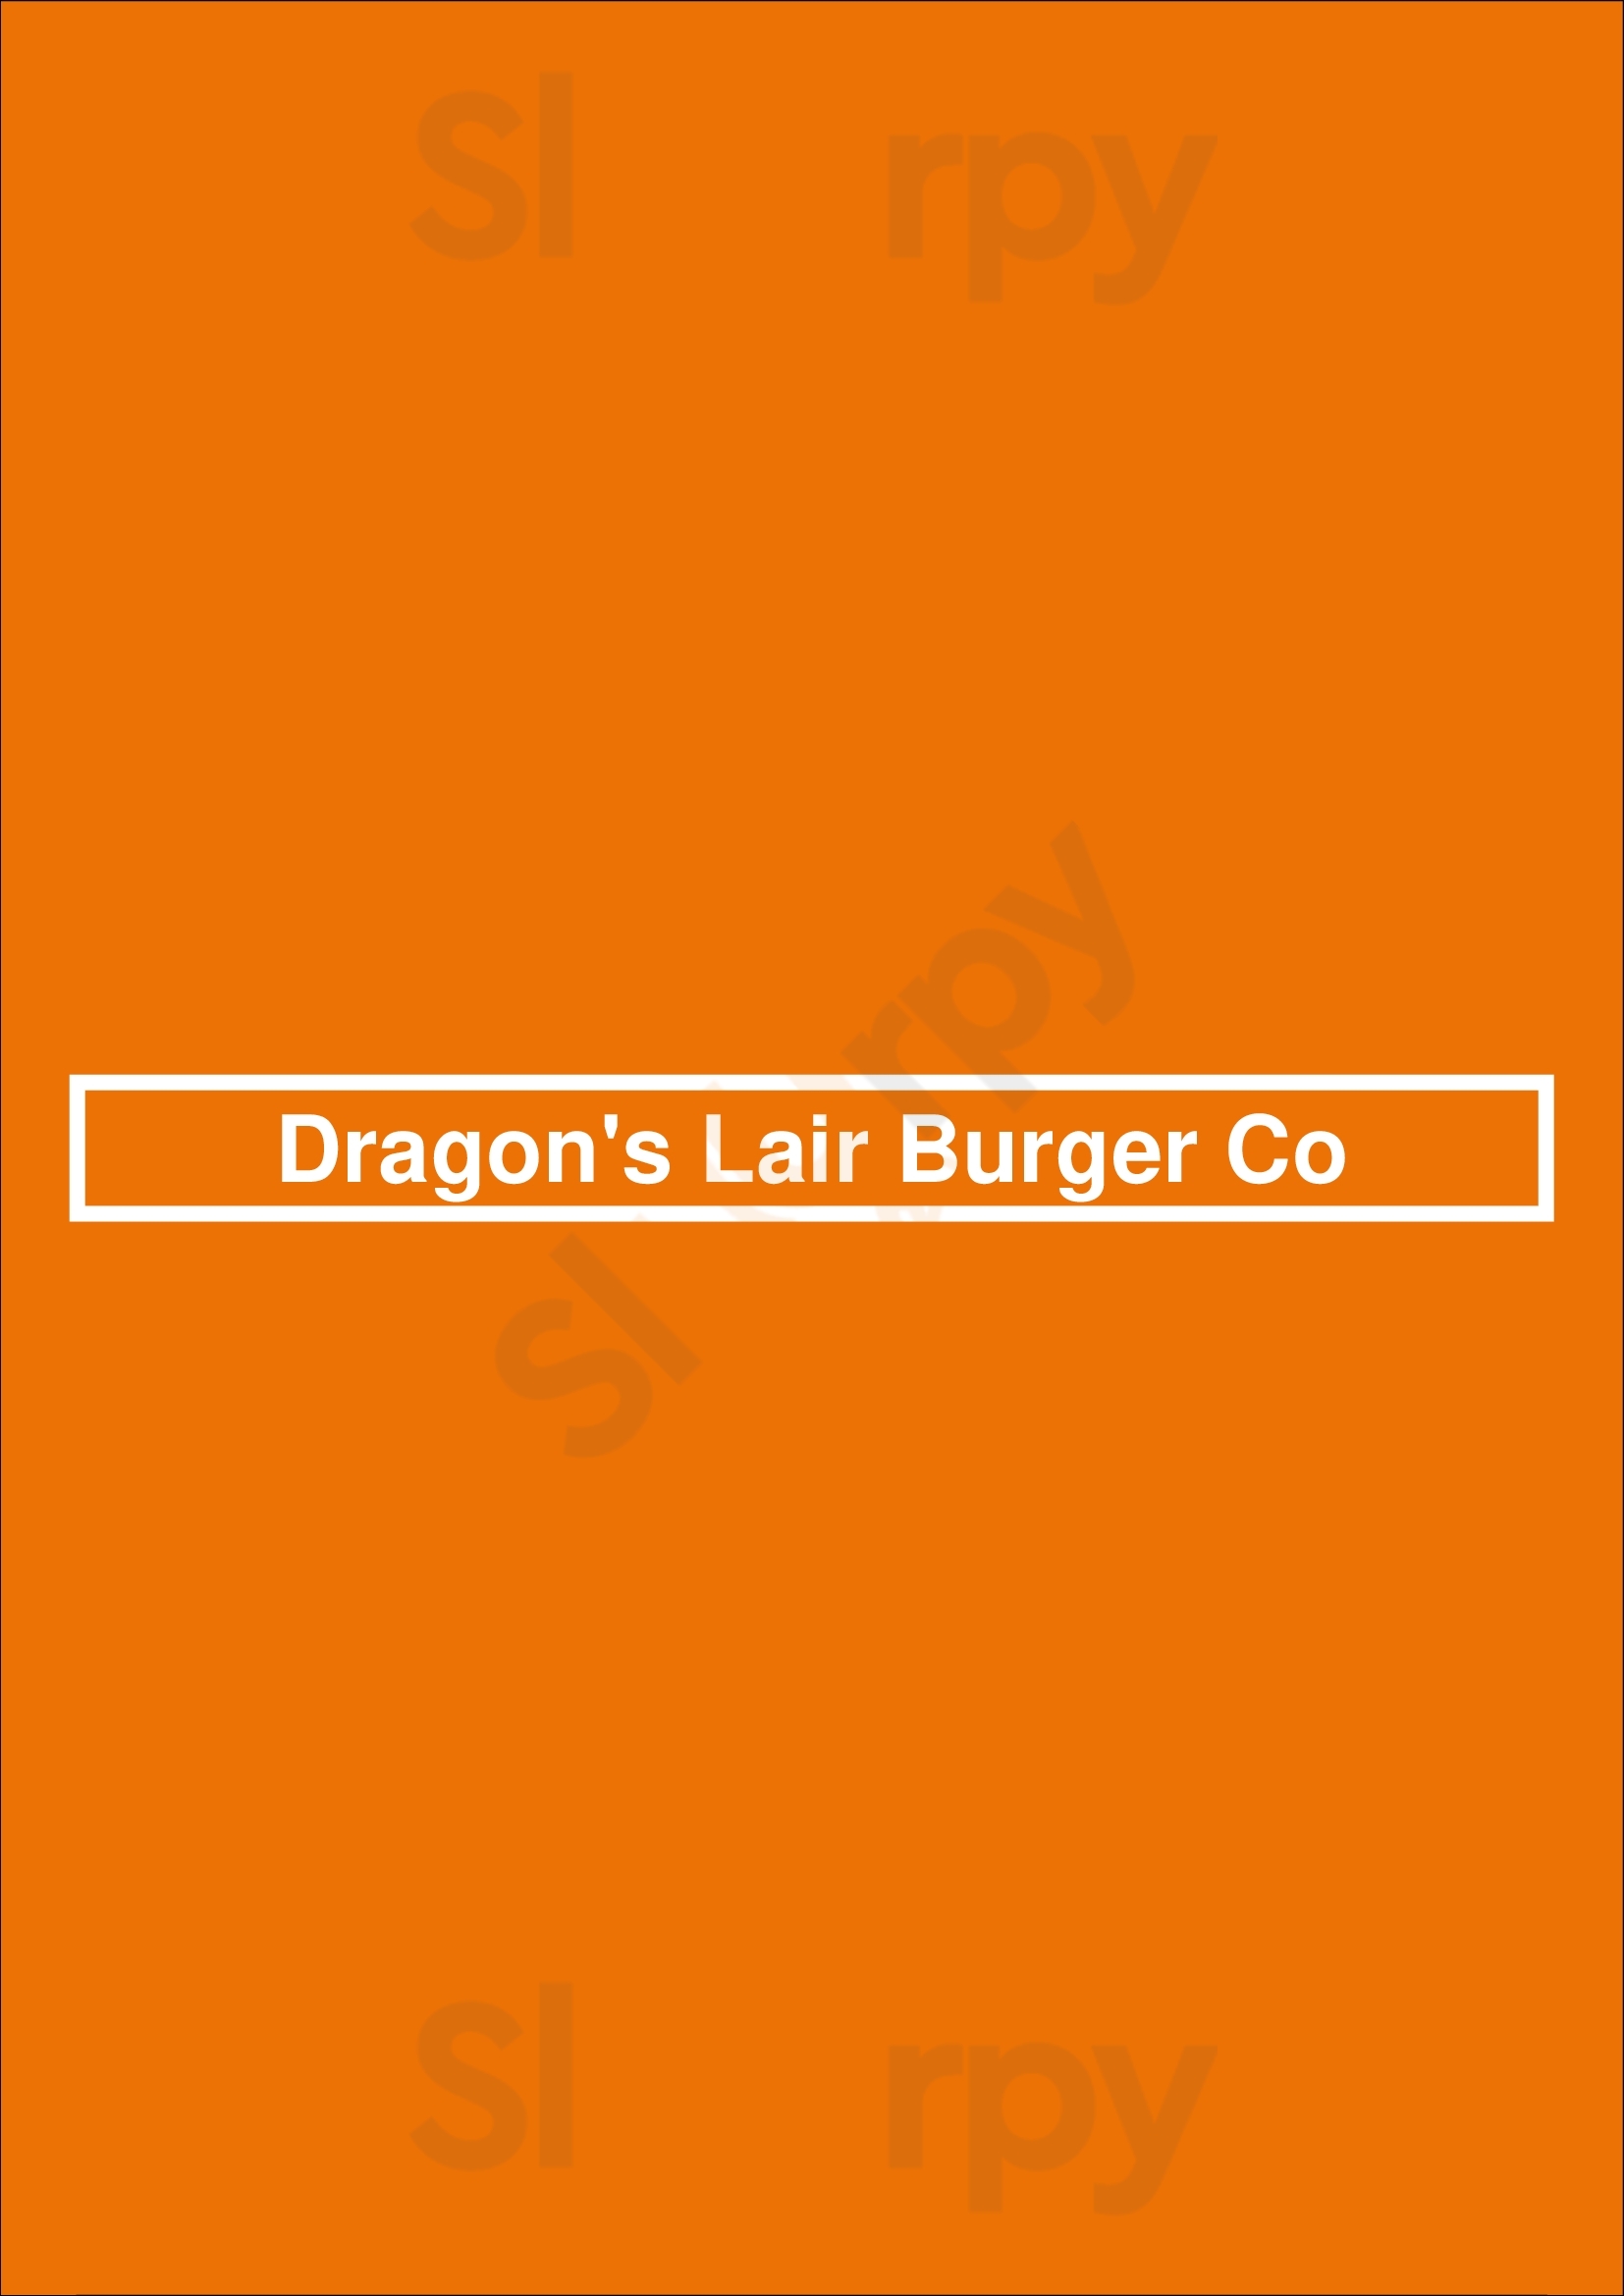 Dragon's Lair Burger Co Calgary Menu - 1